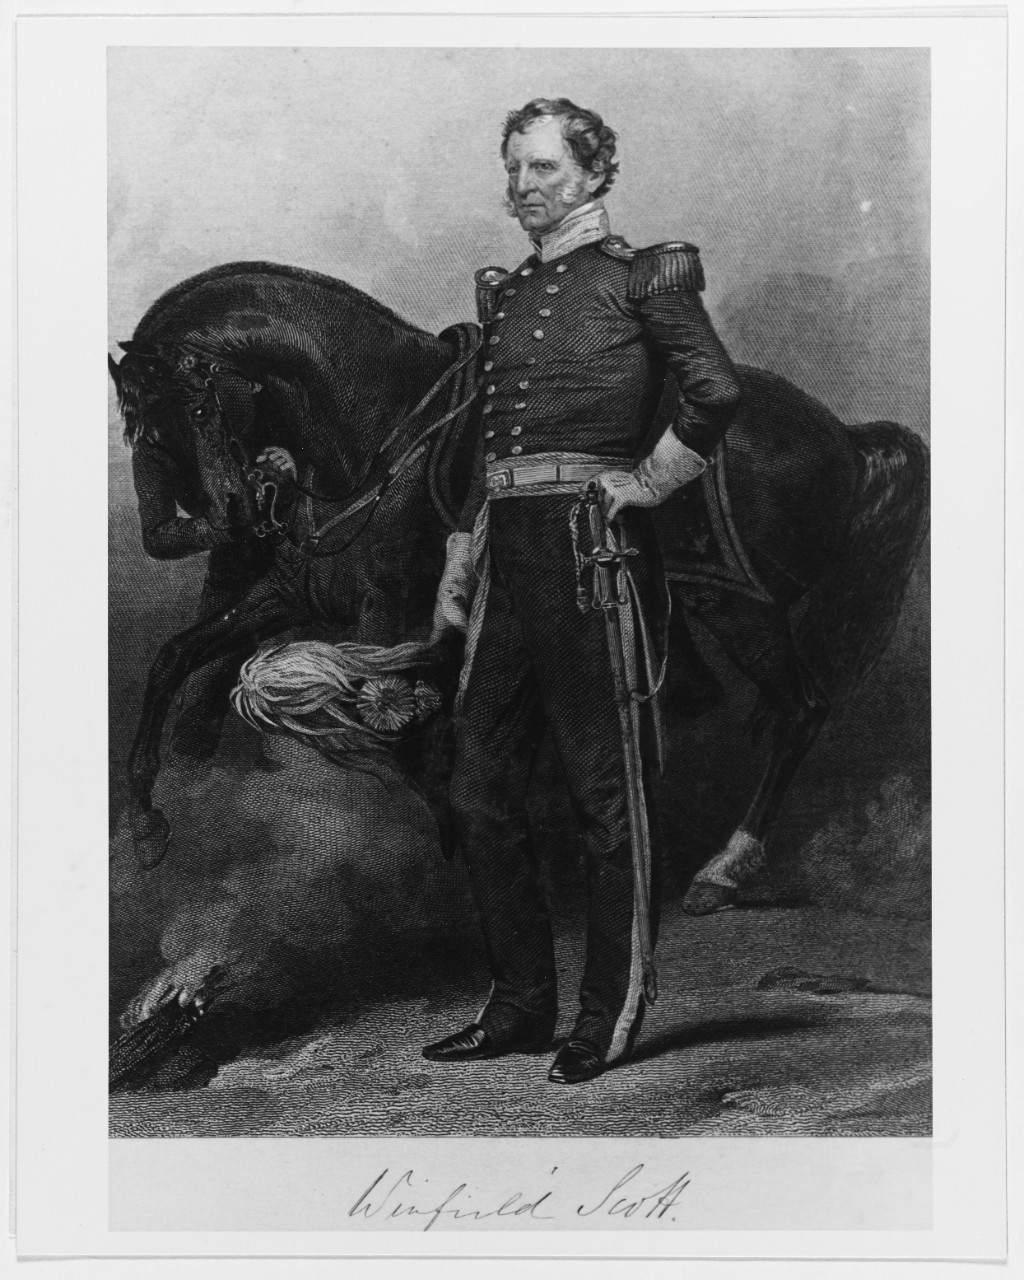 General-in-Chief, Winfield Scott, U.S. Army